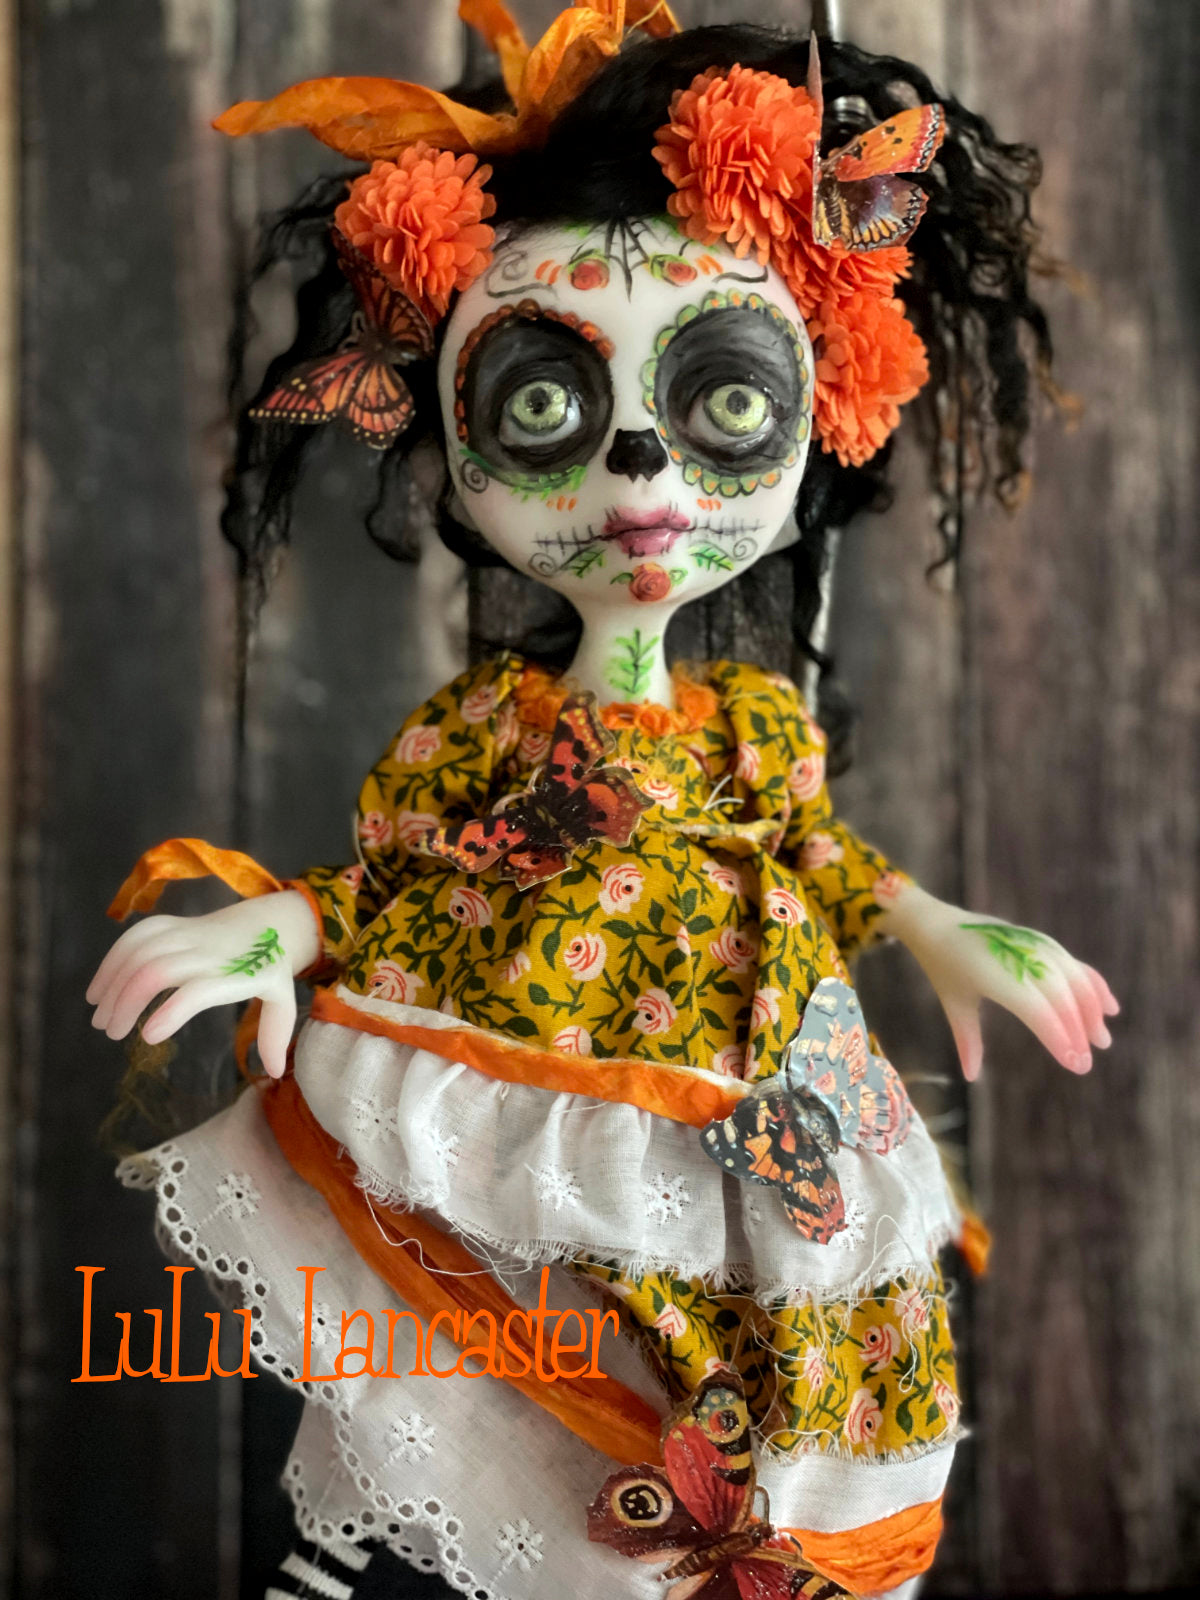 Migdaliah hanging Day of the dead Original LuLu Lancaster Halloween Art Doll